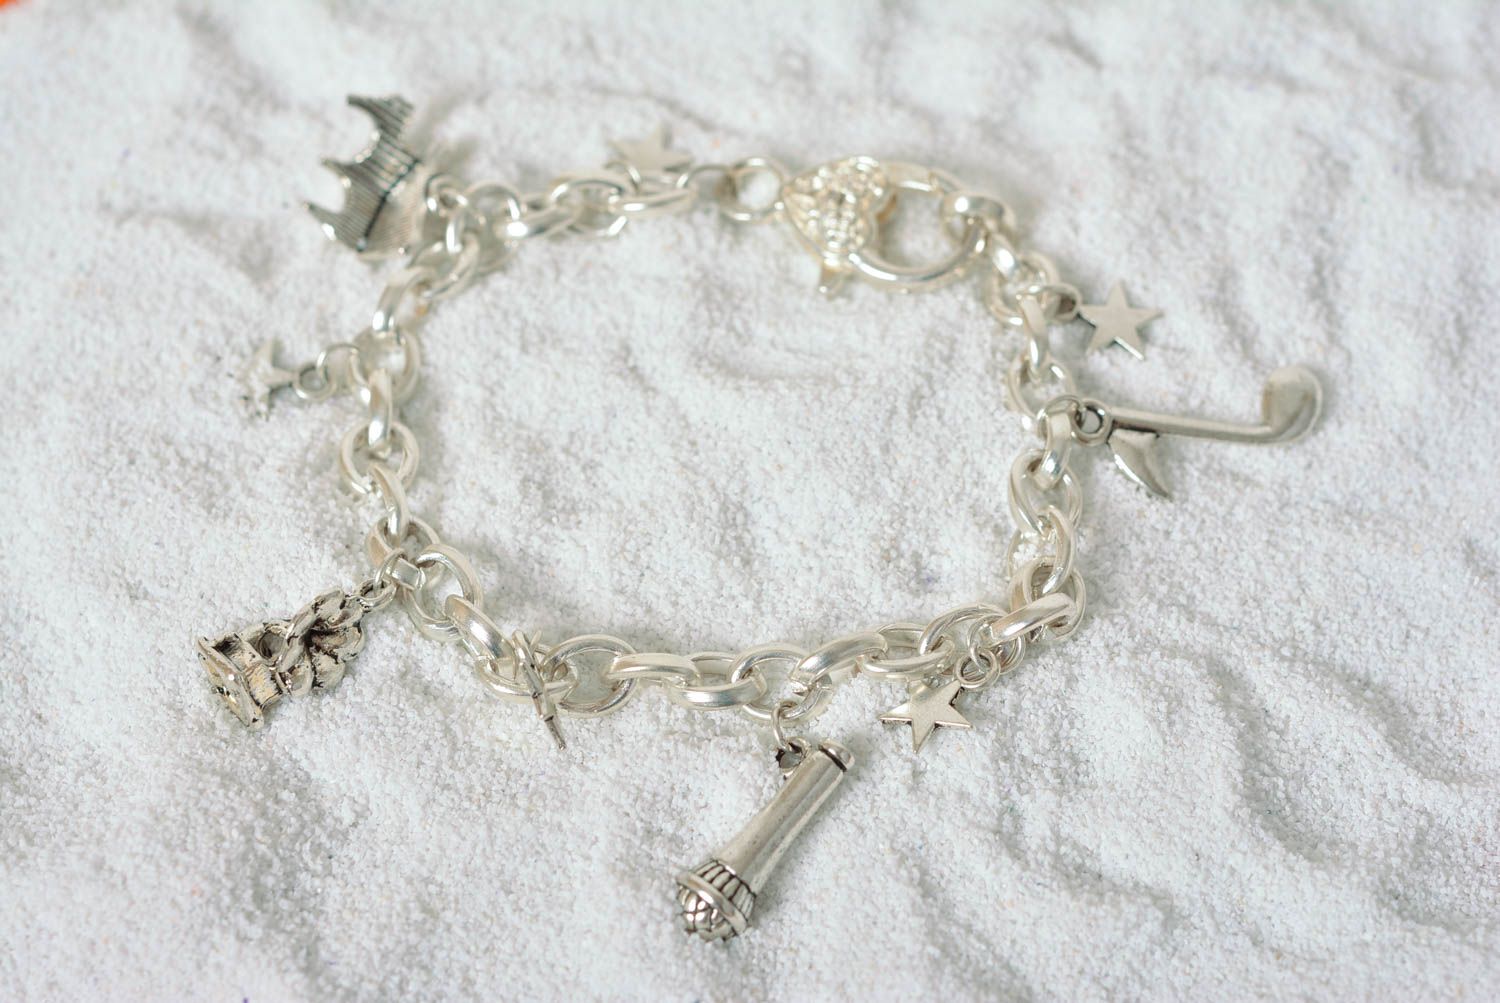 Metal bracelet homemade jewelry designer accessories charm bracelet cool gifts photo 1